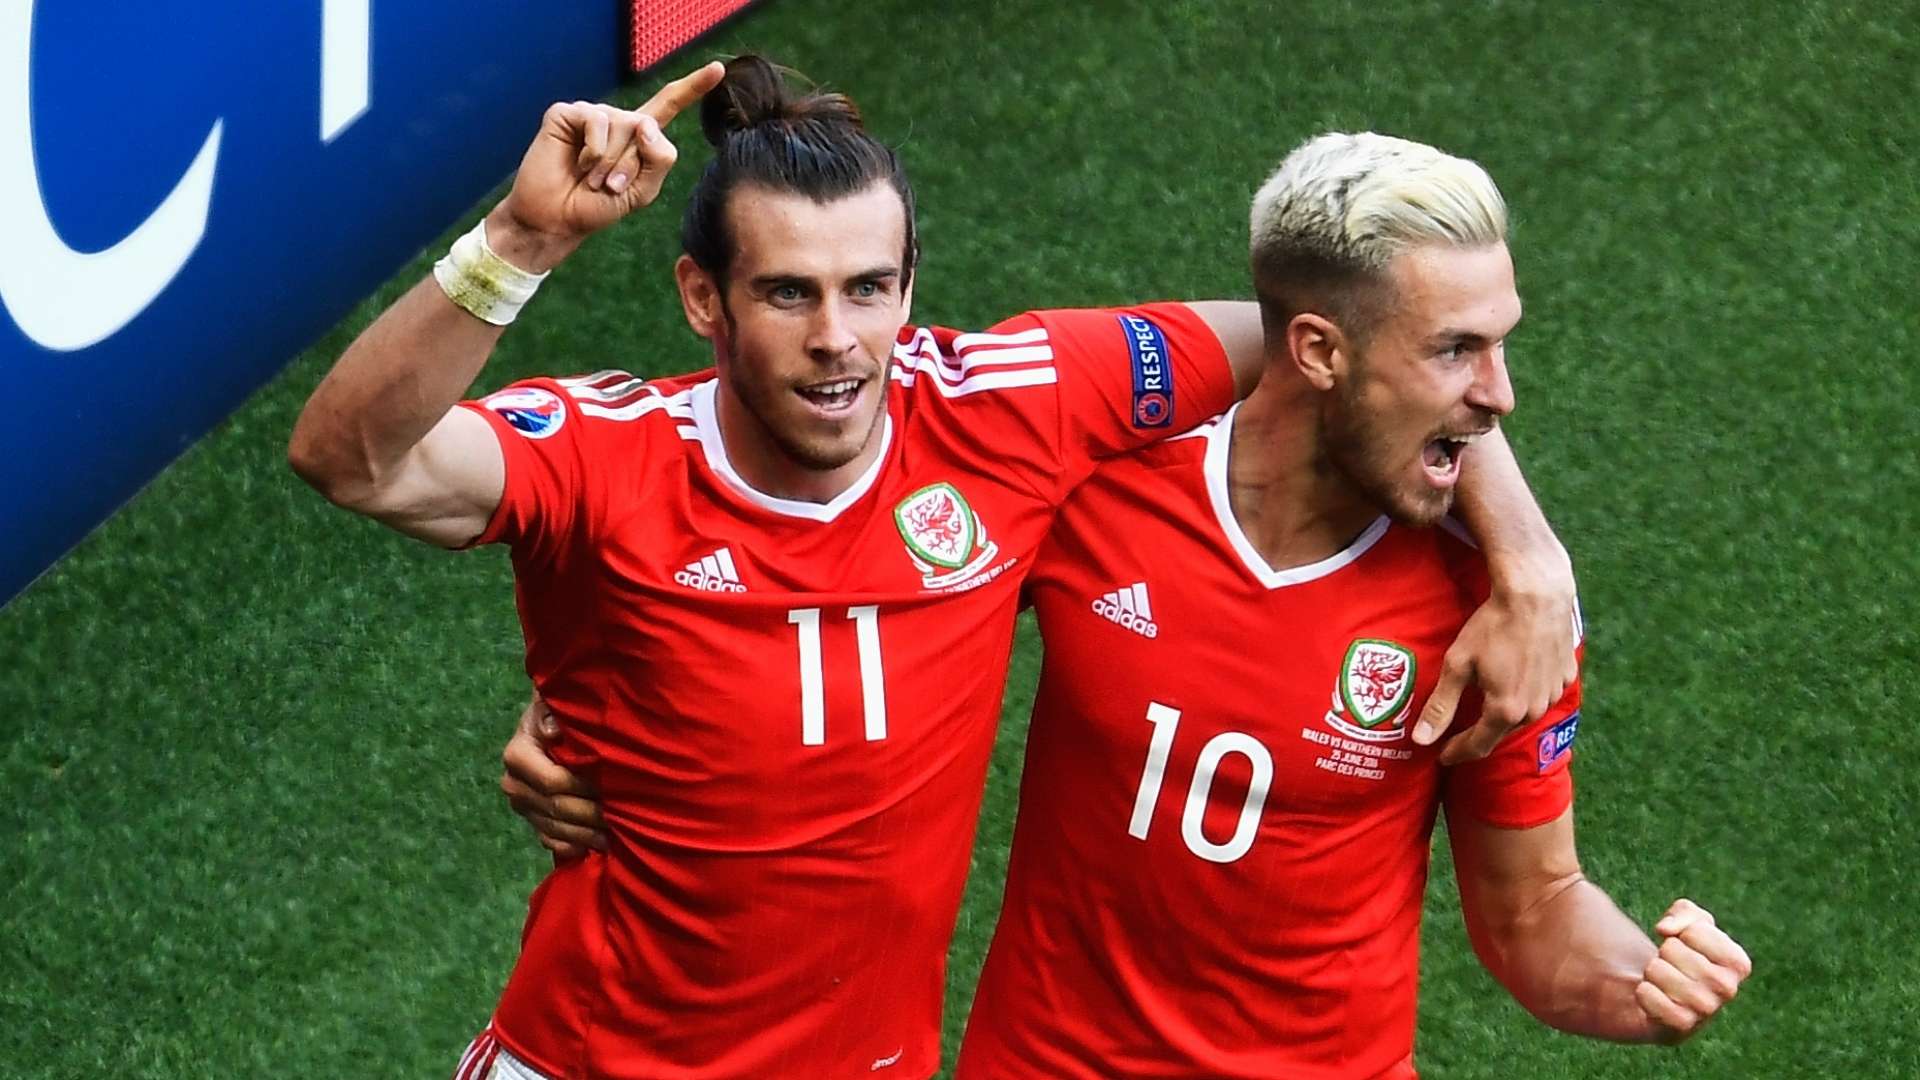 Gareth Bale Aaron Ramsey Wales v Northern Ireland Euro 2016 25062016